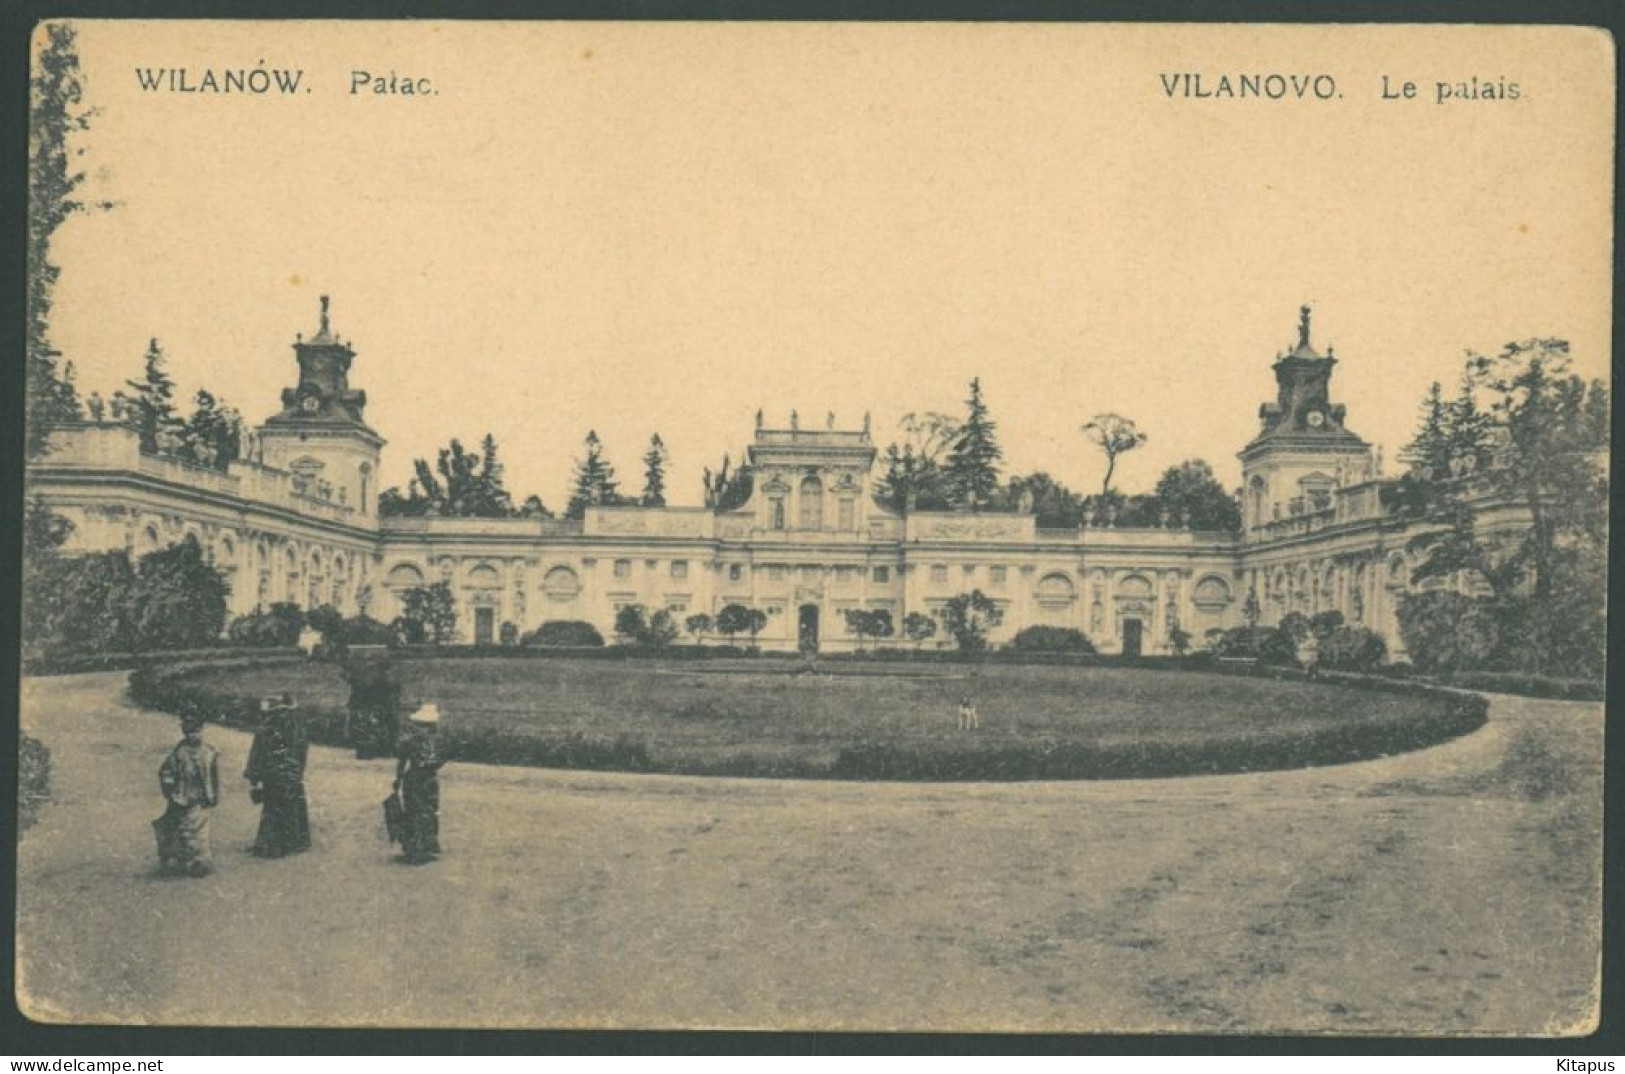 WARSZAWA Wilanow Vilanovo Vintage Postcard Warsaw Varsovie Warschau Poland - Polen